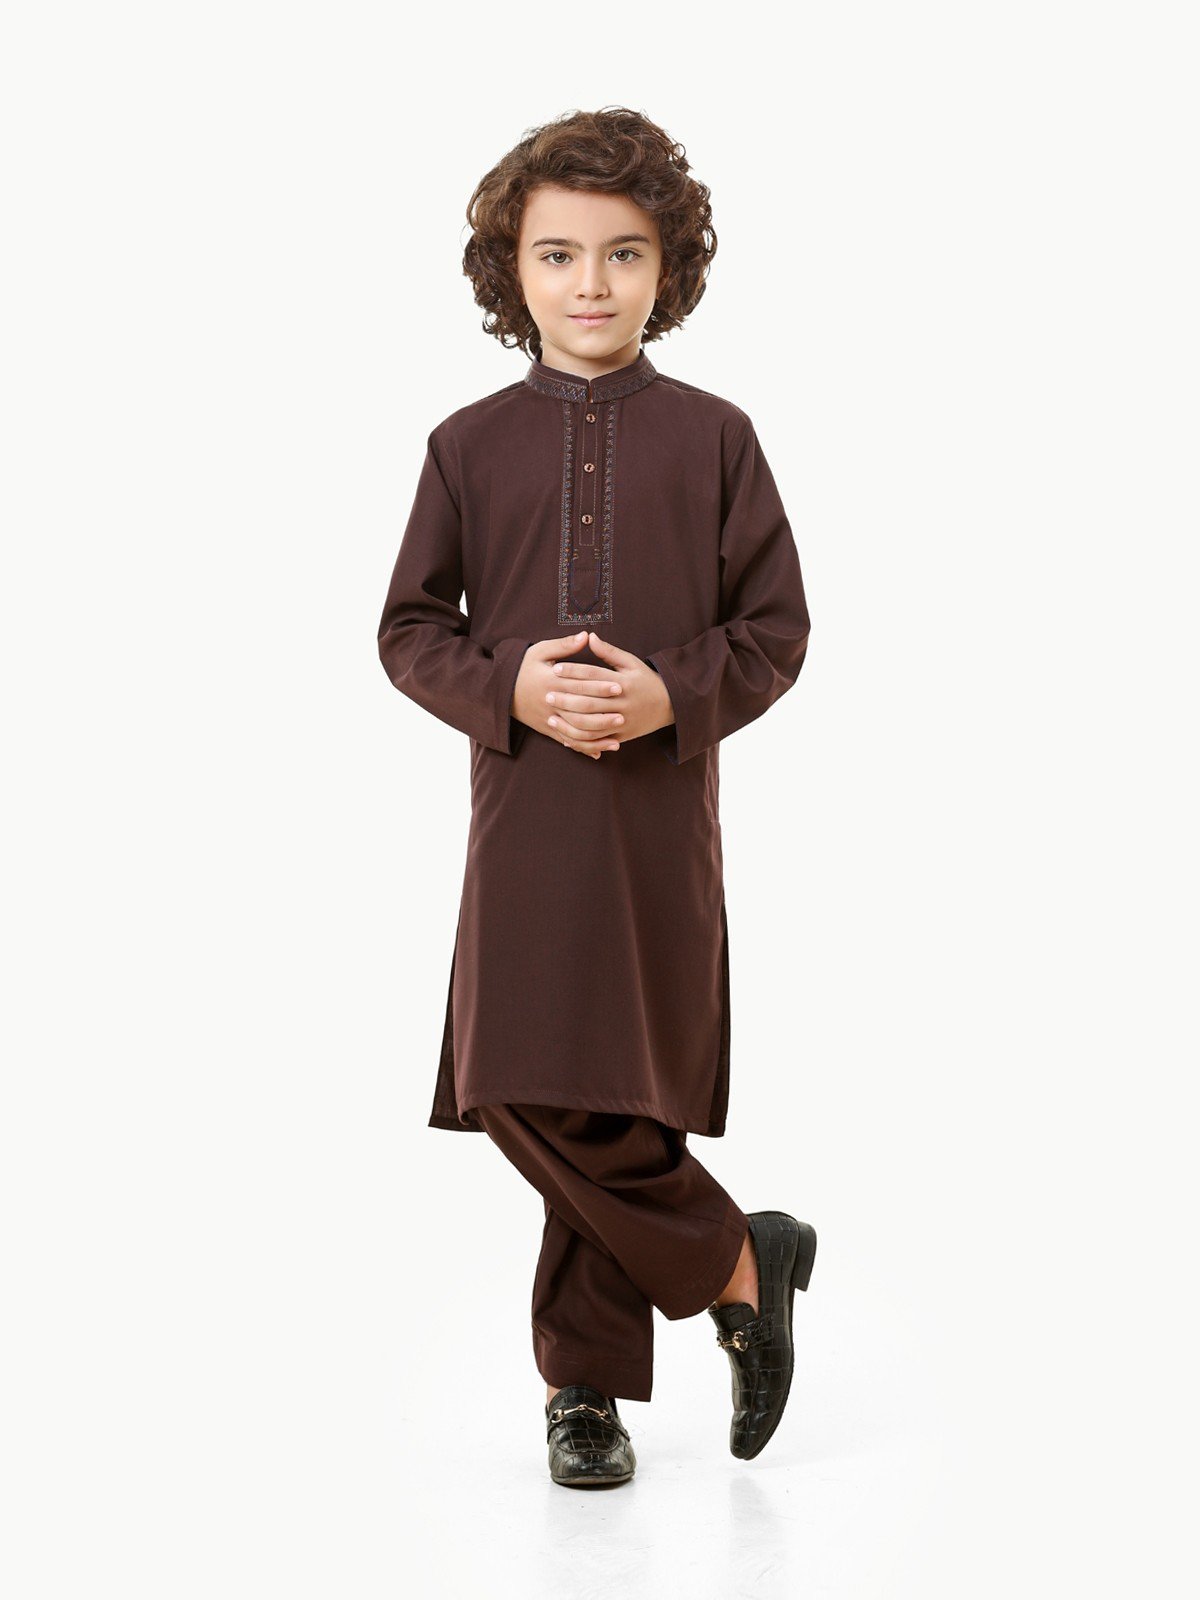 Boy's Chocolate Brown Kurta Shalwar - EBTKS23-3812